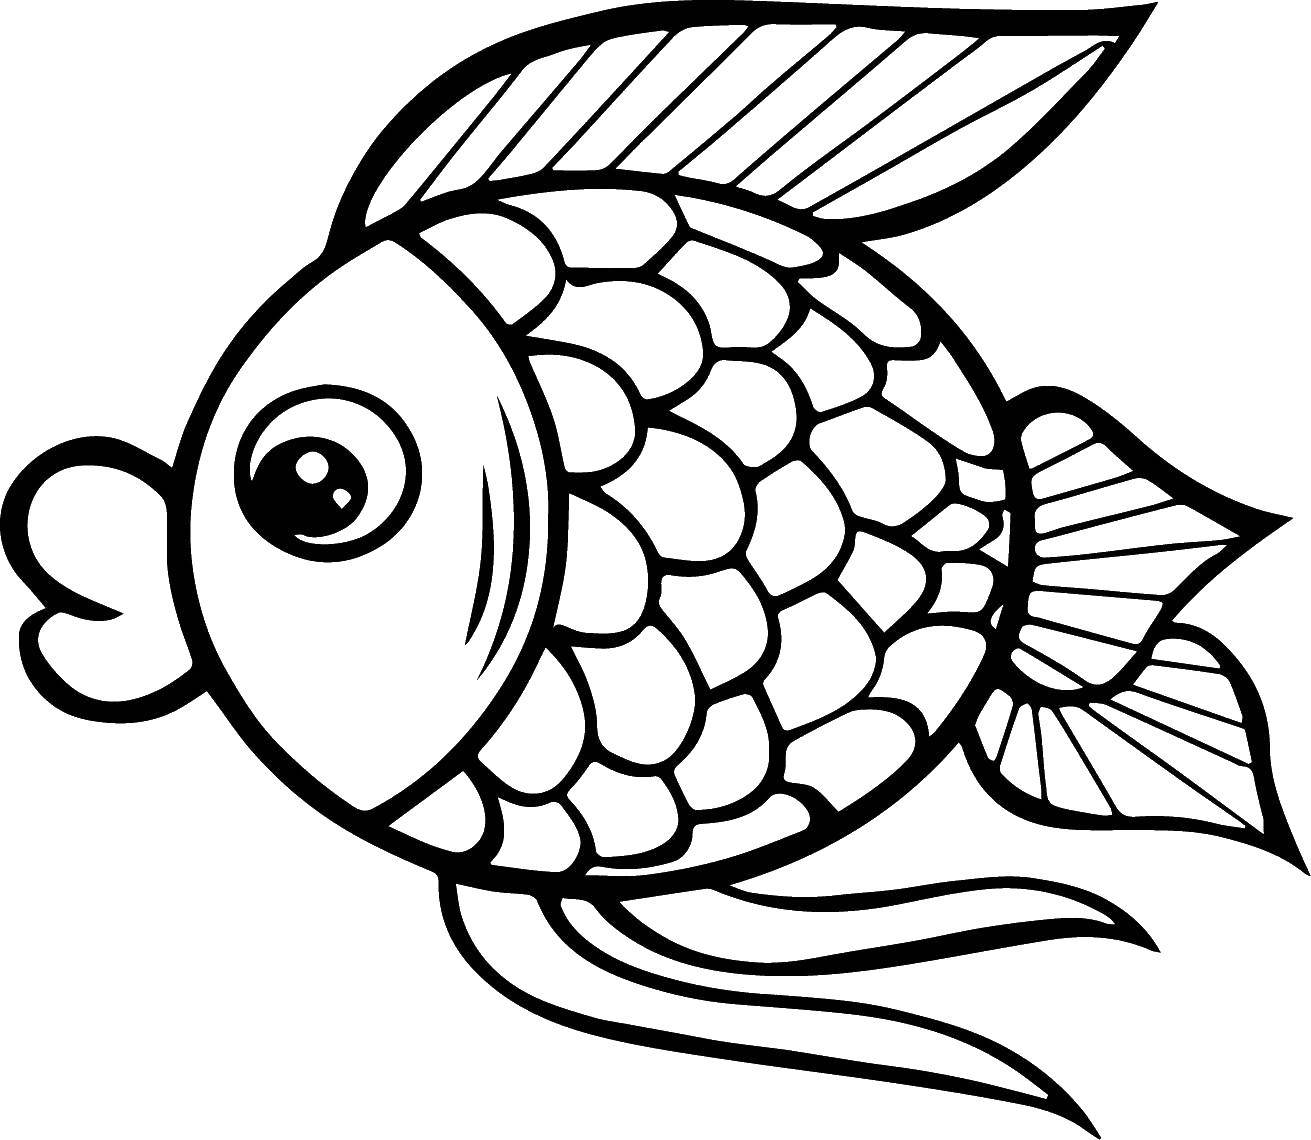 Coloring Goldfish. Category Fish. Tags:  fish, goldfish, marine life.